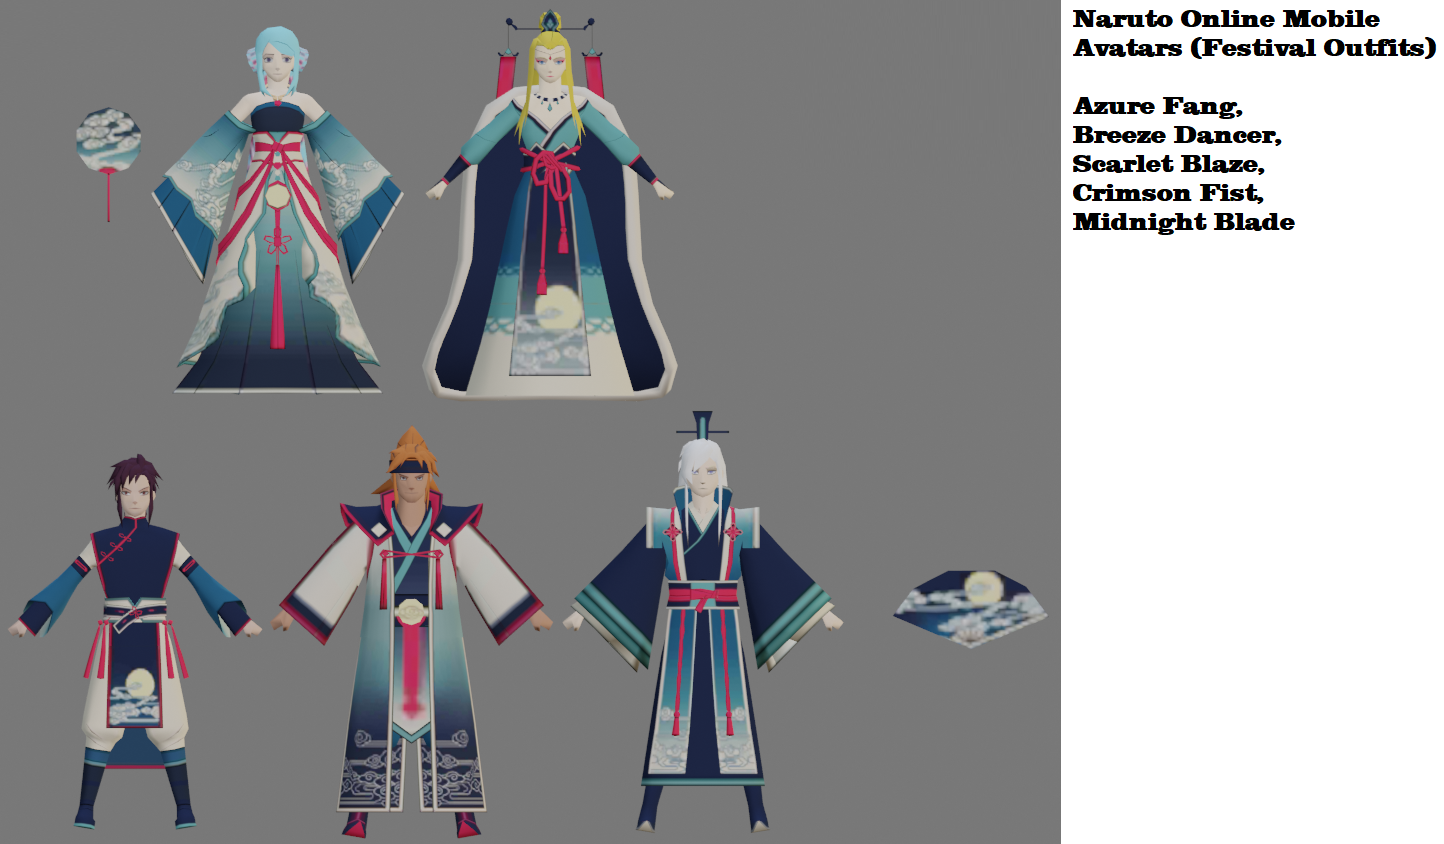 Naruto Online Mobile Avatars (Hana Style) by ChakraWarrior2012 on DeviantArt